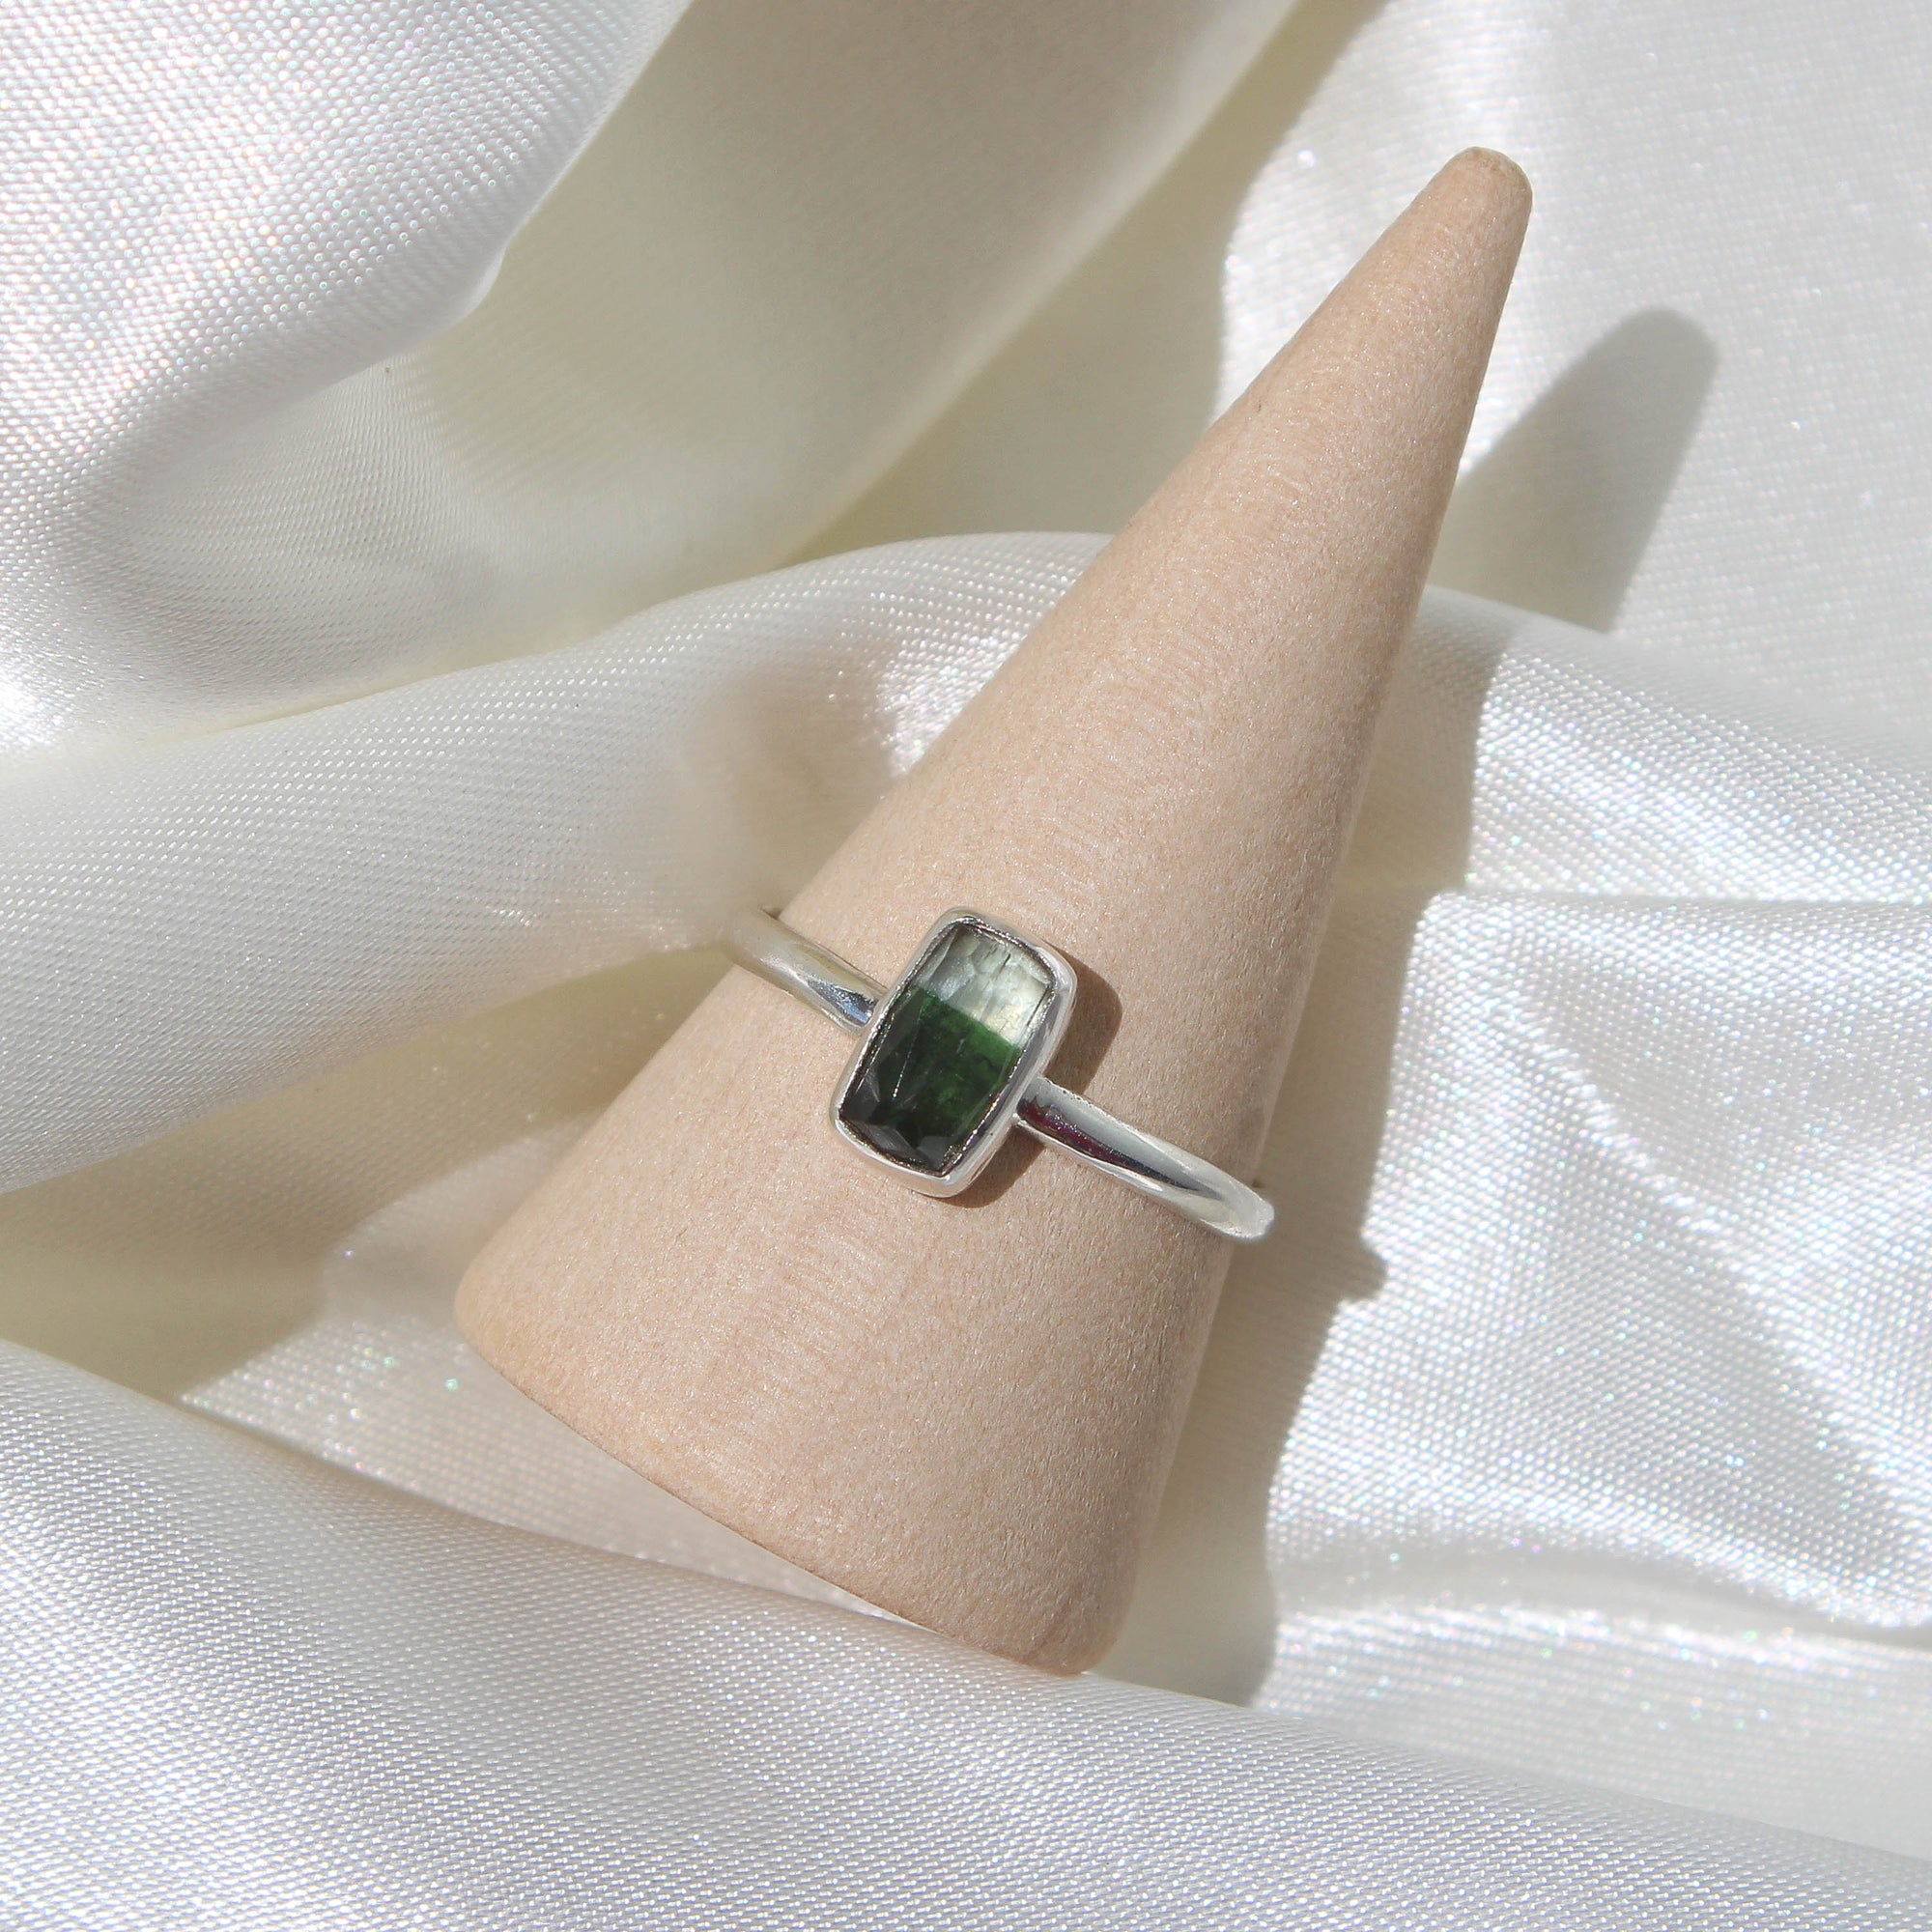 Green Bi-Color Tourmaline Ring - Size 8